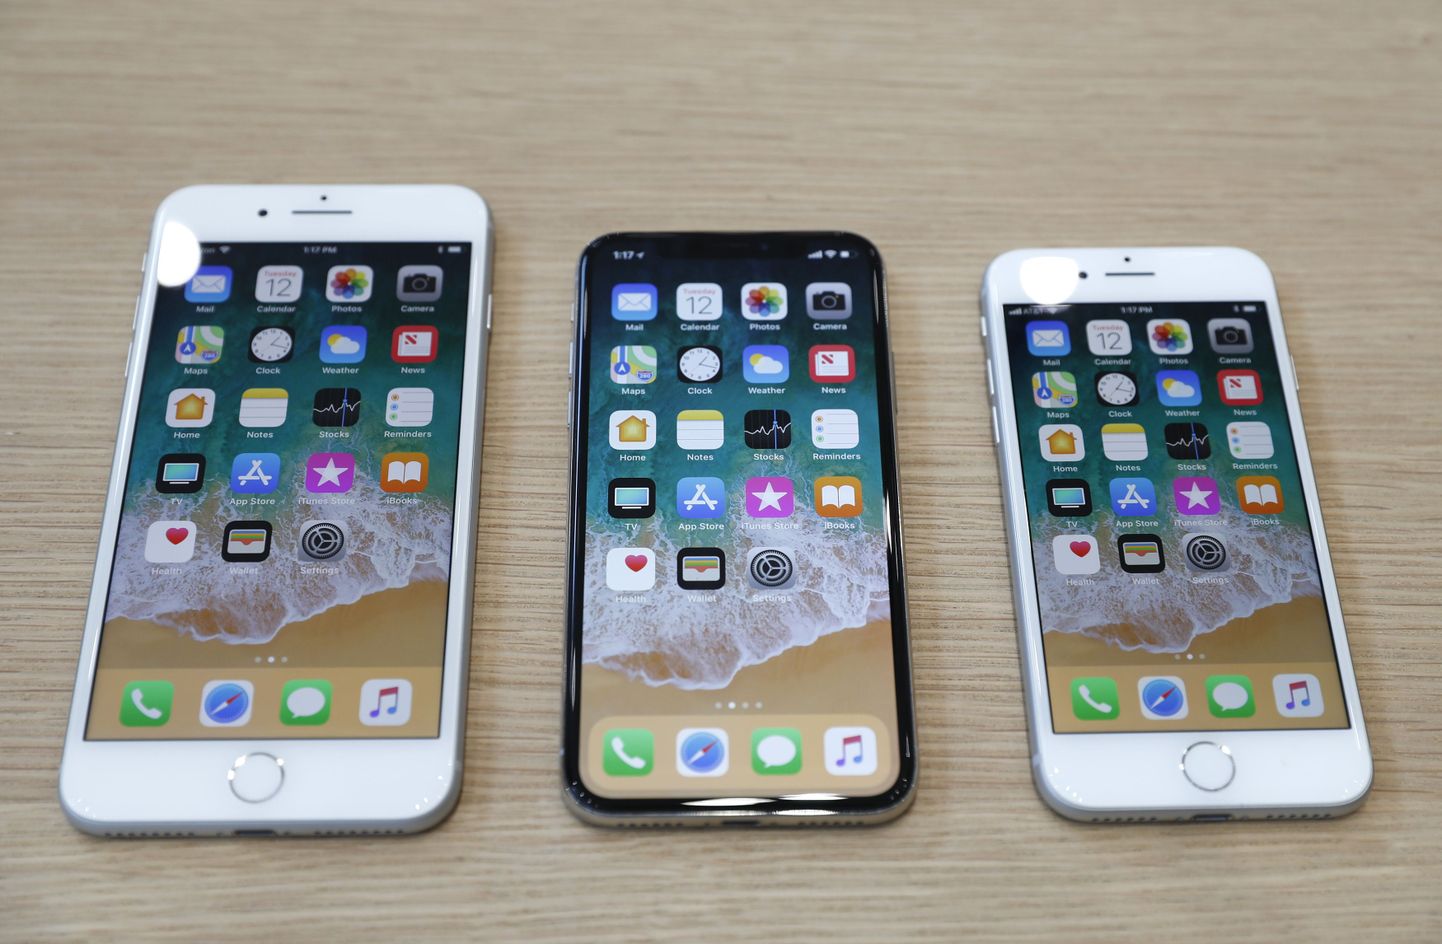 Слева - iPhone 8 pluss, в центре - iPhone X и справа - обычный iPhone 8.